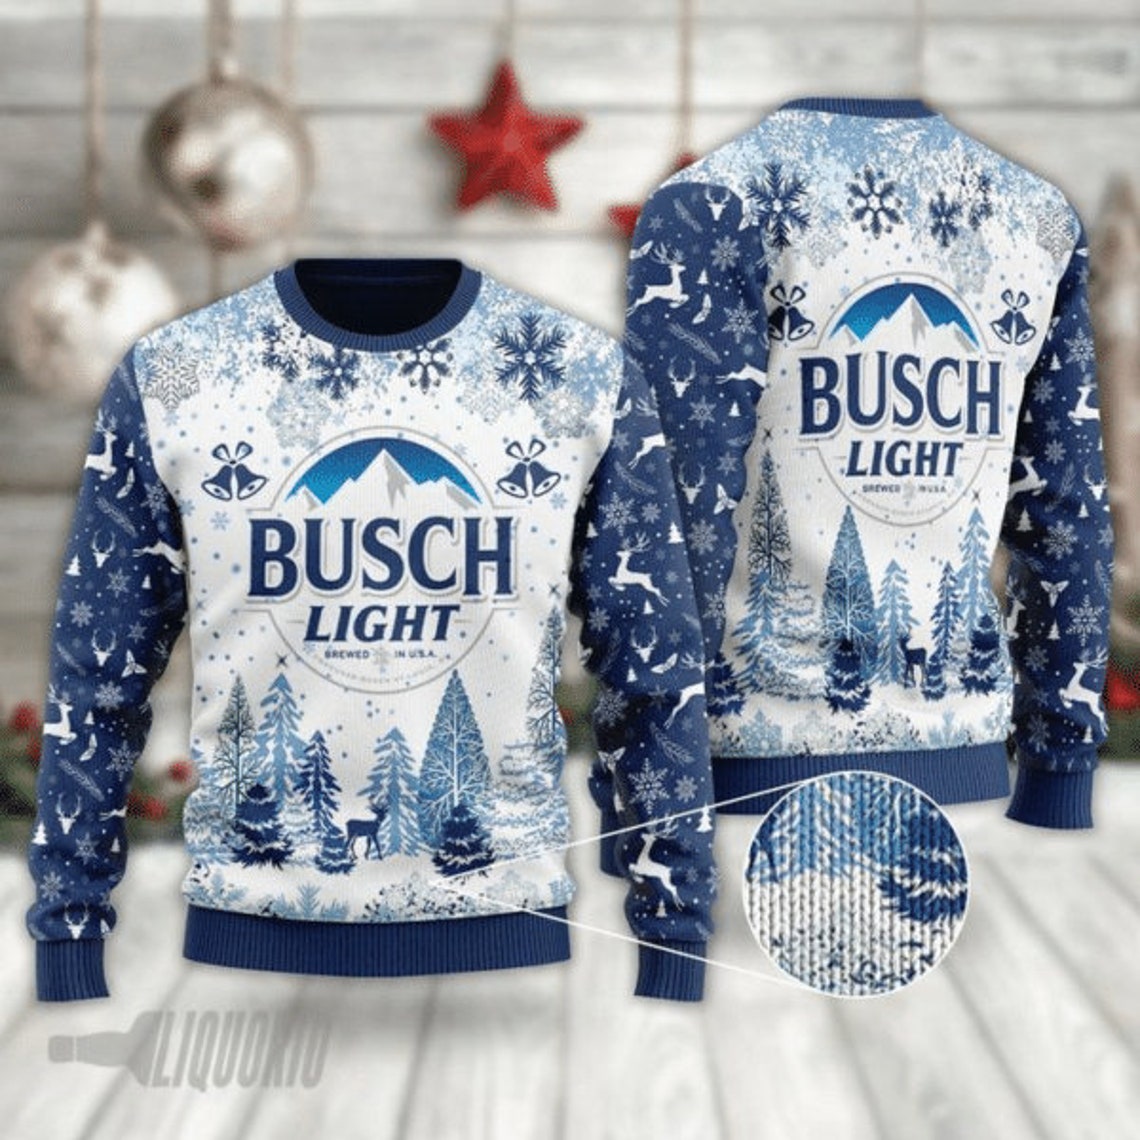 B U S C H Light Knitted Sweater Ugly Christmas Shirt